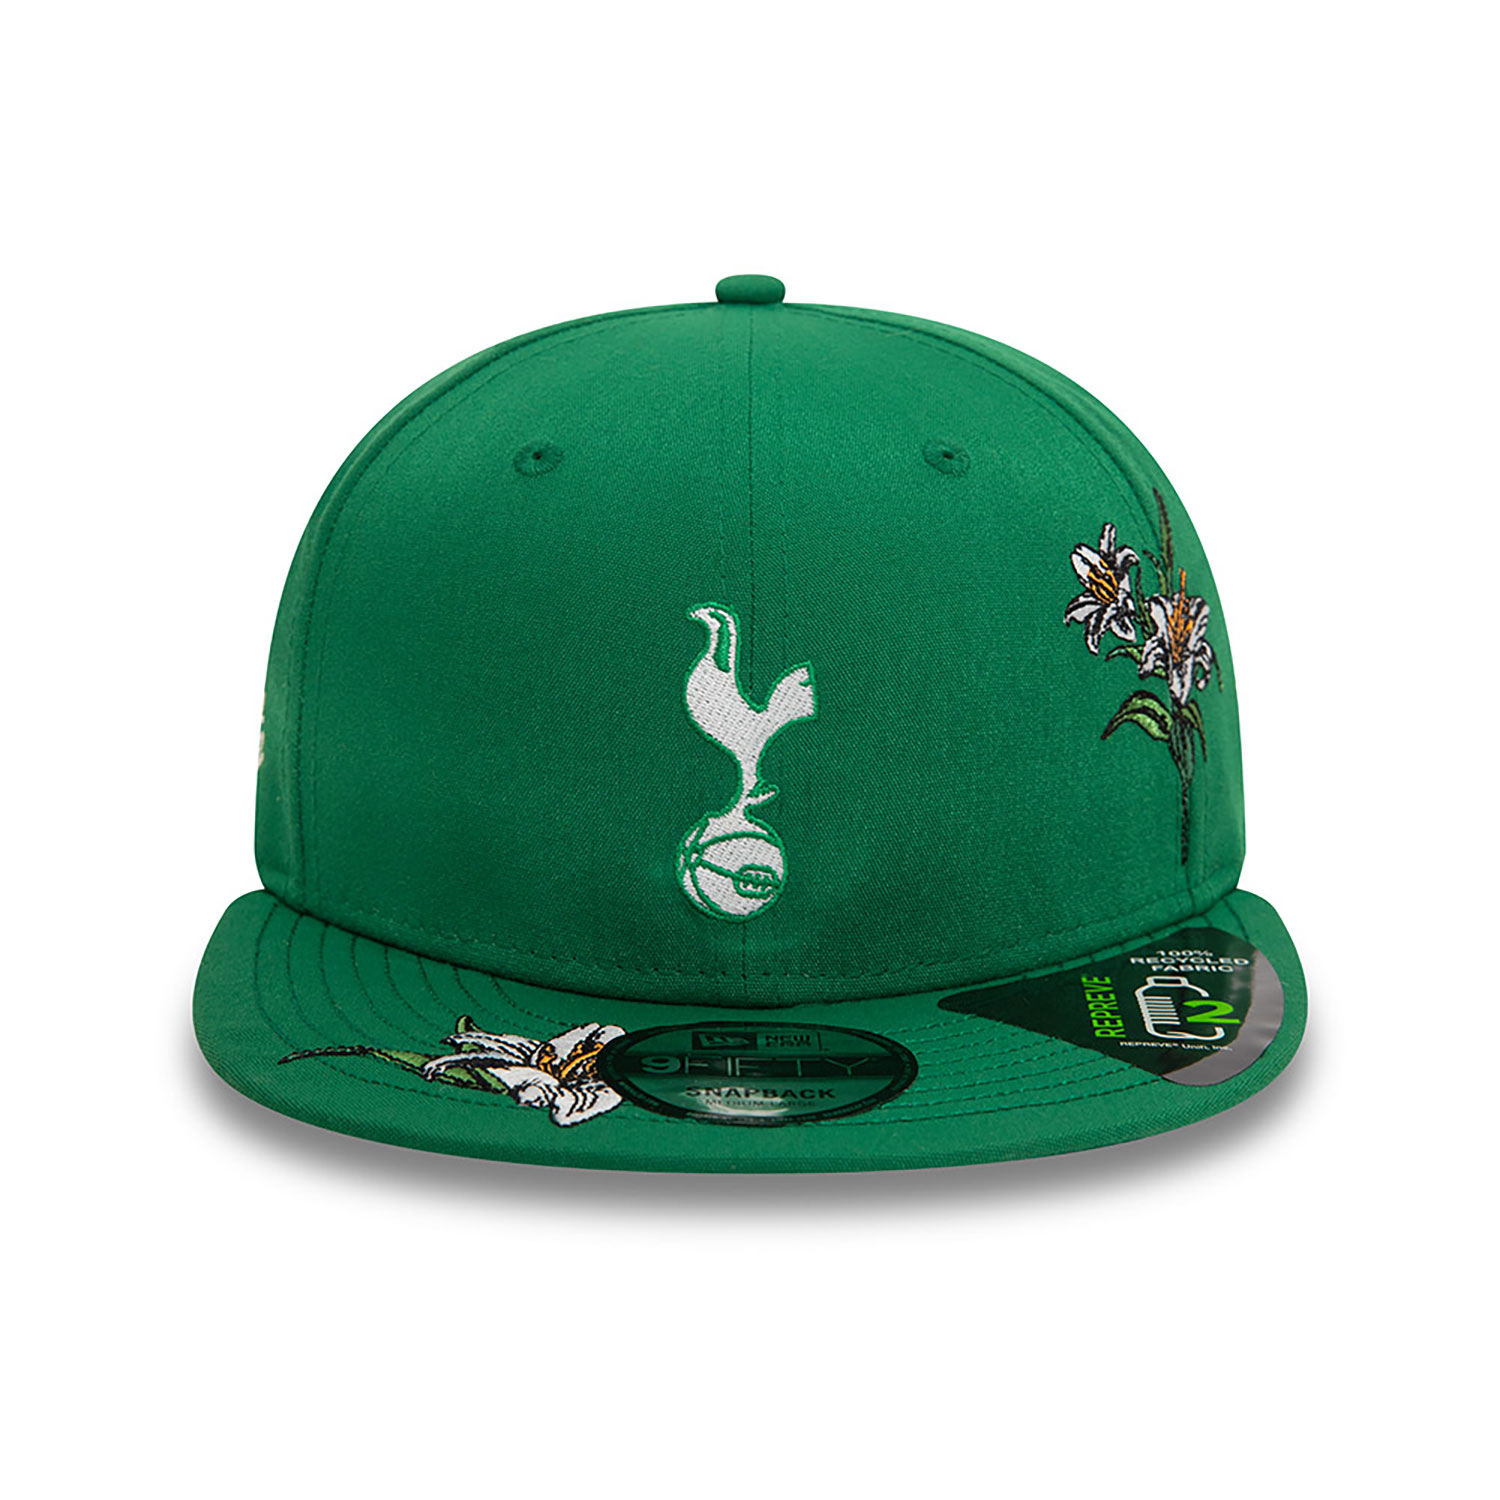 Tottenham Hotspur FC Lilywhite Repreve Green 9FIFTY Snapback Cap